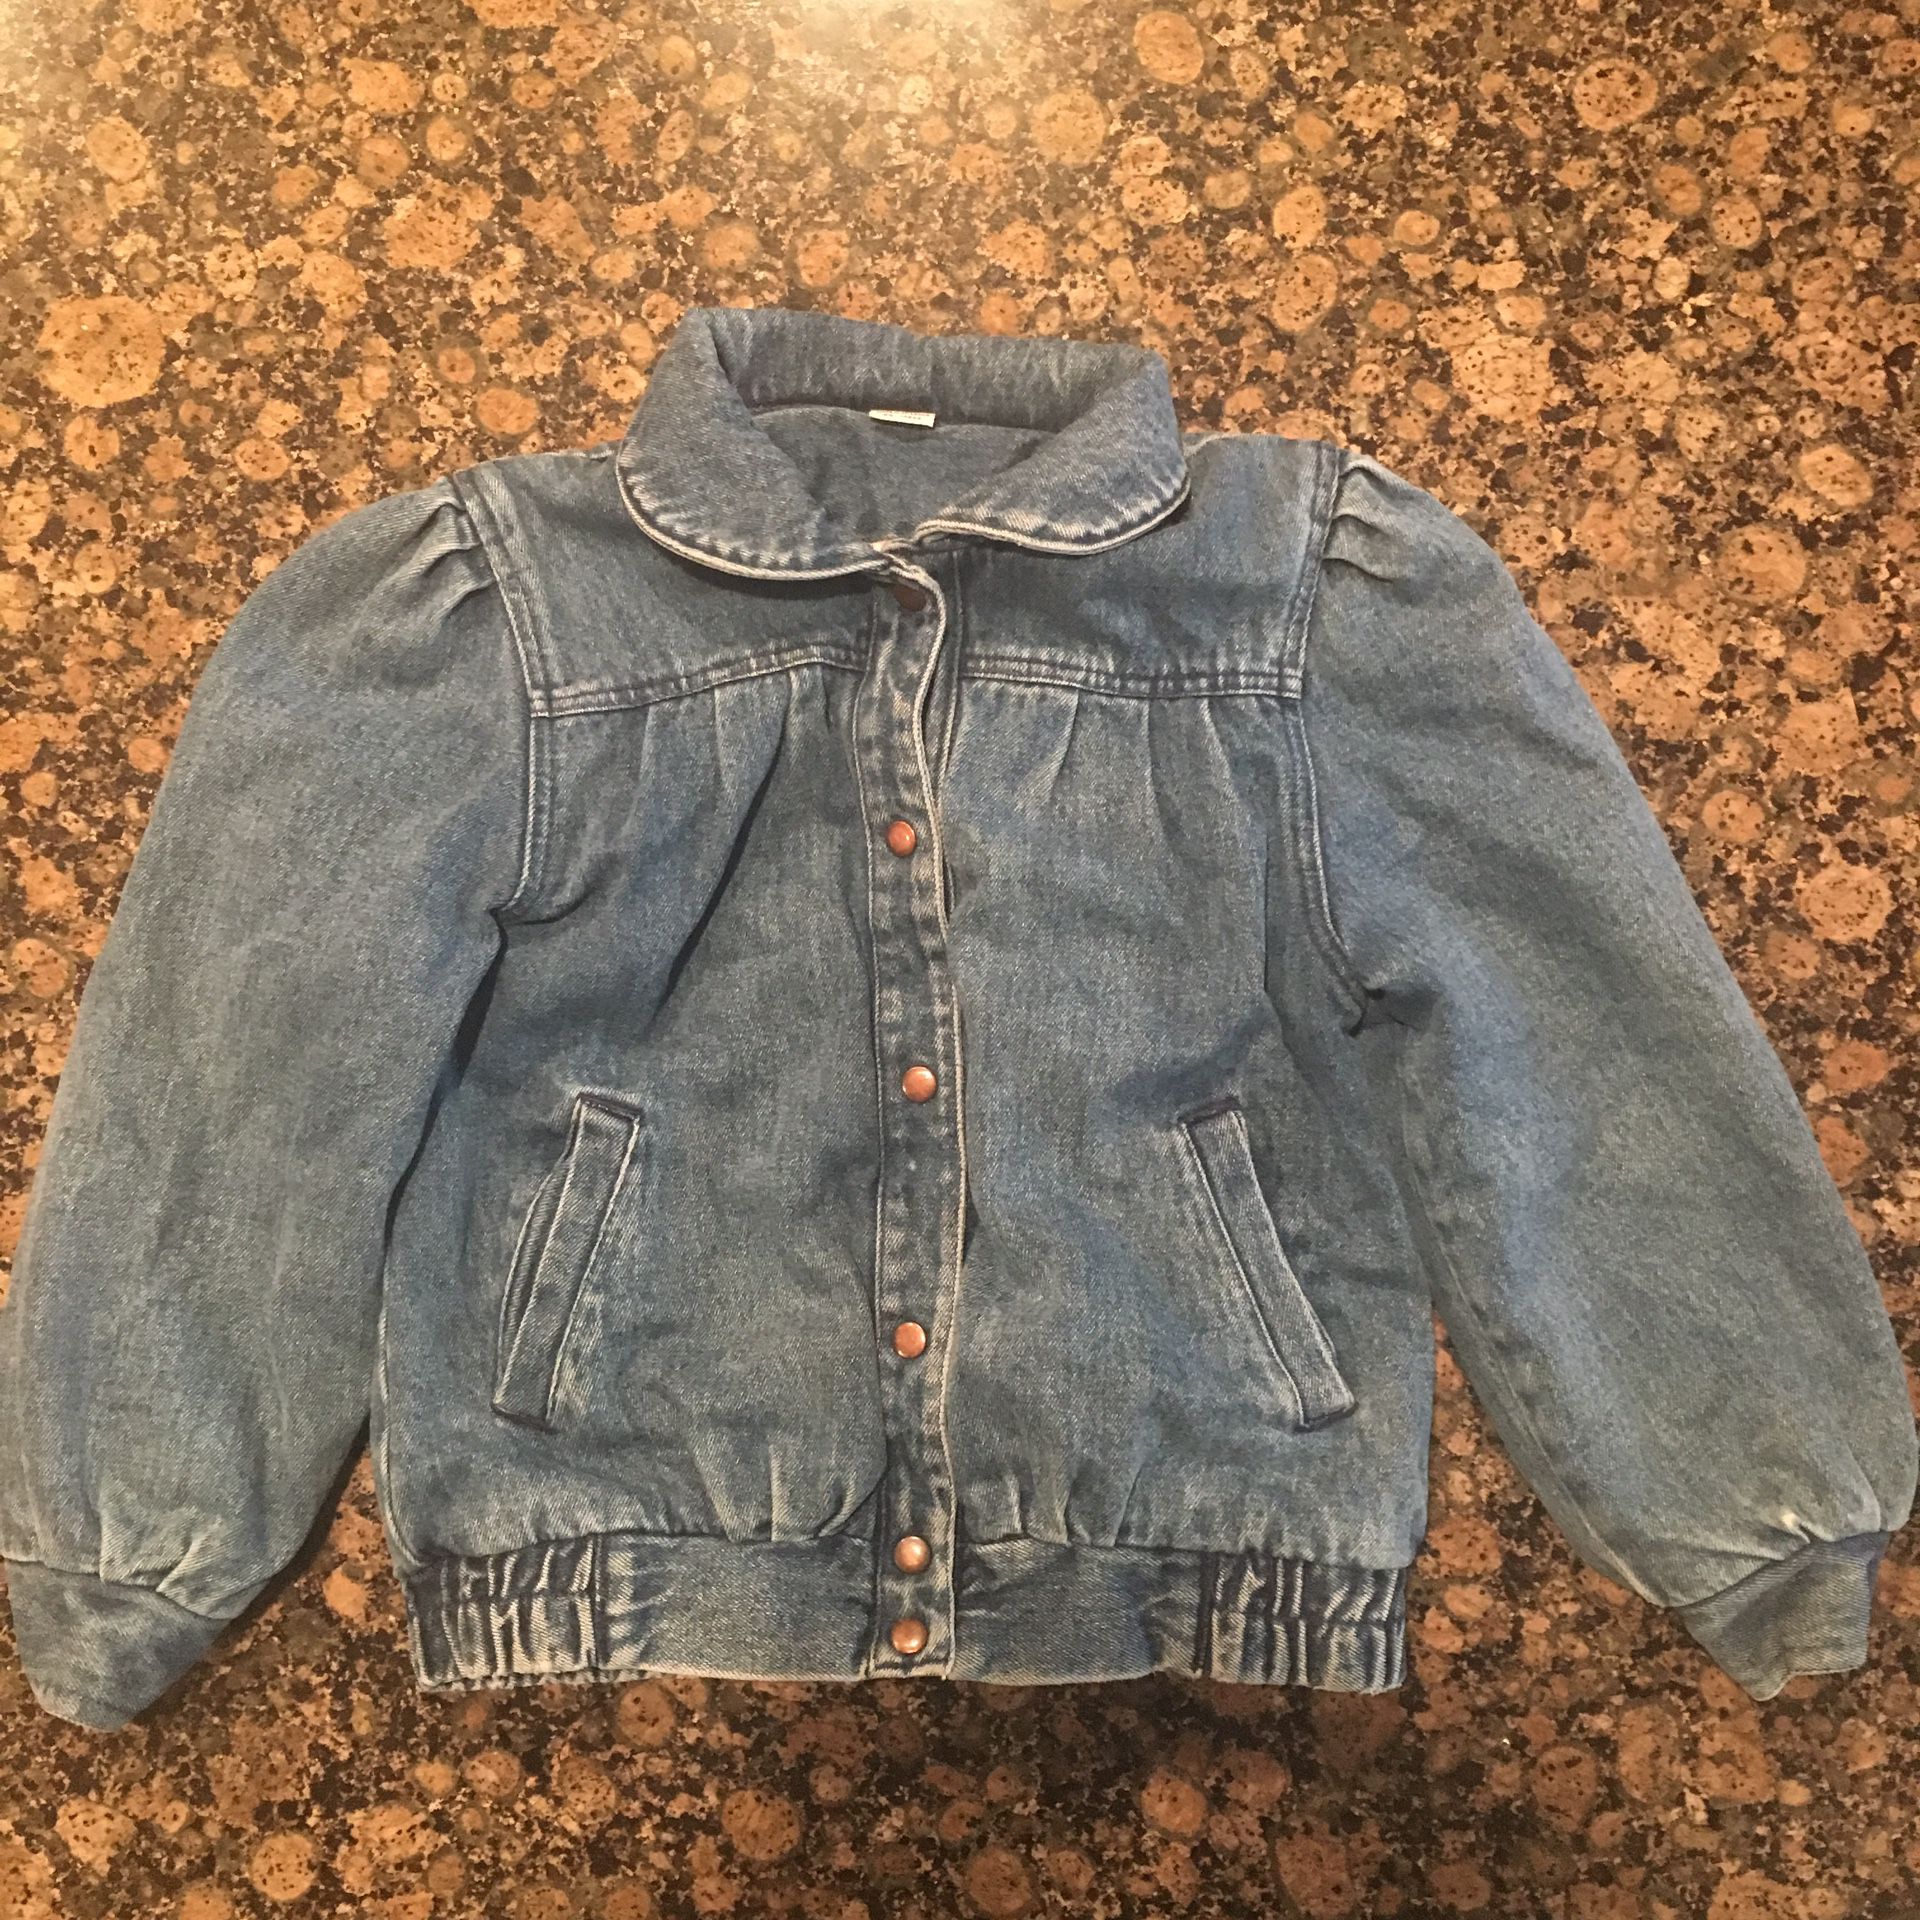 Vintage girls jean jacket size 8